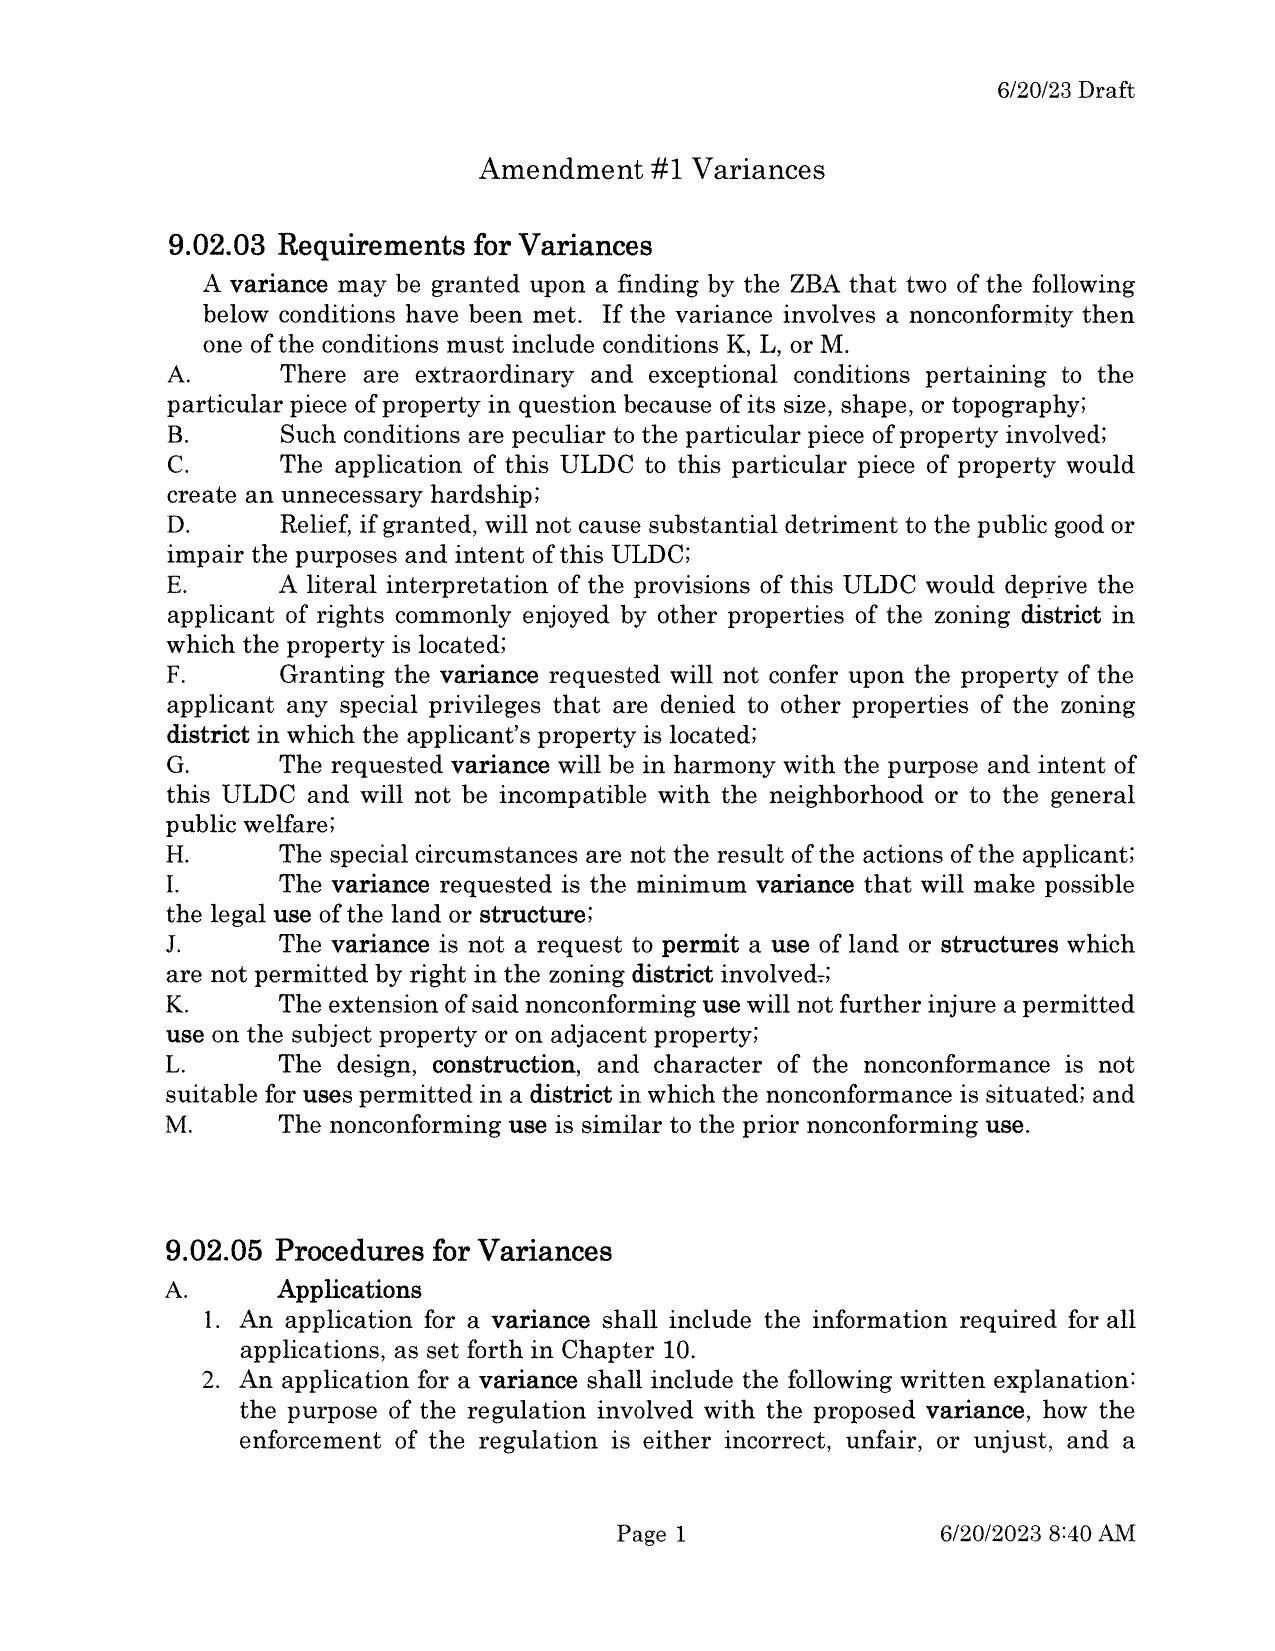 Amendment #1 Variances (plain)